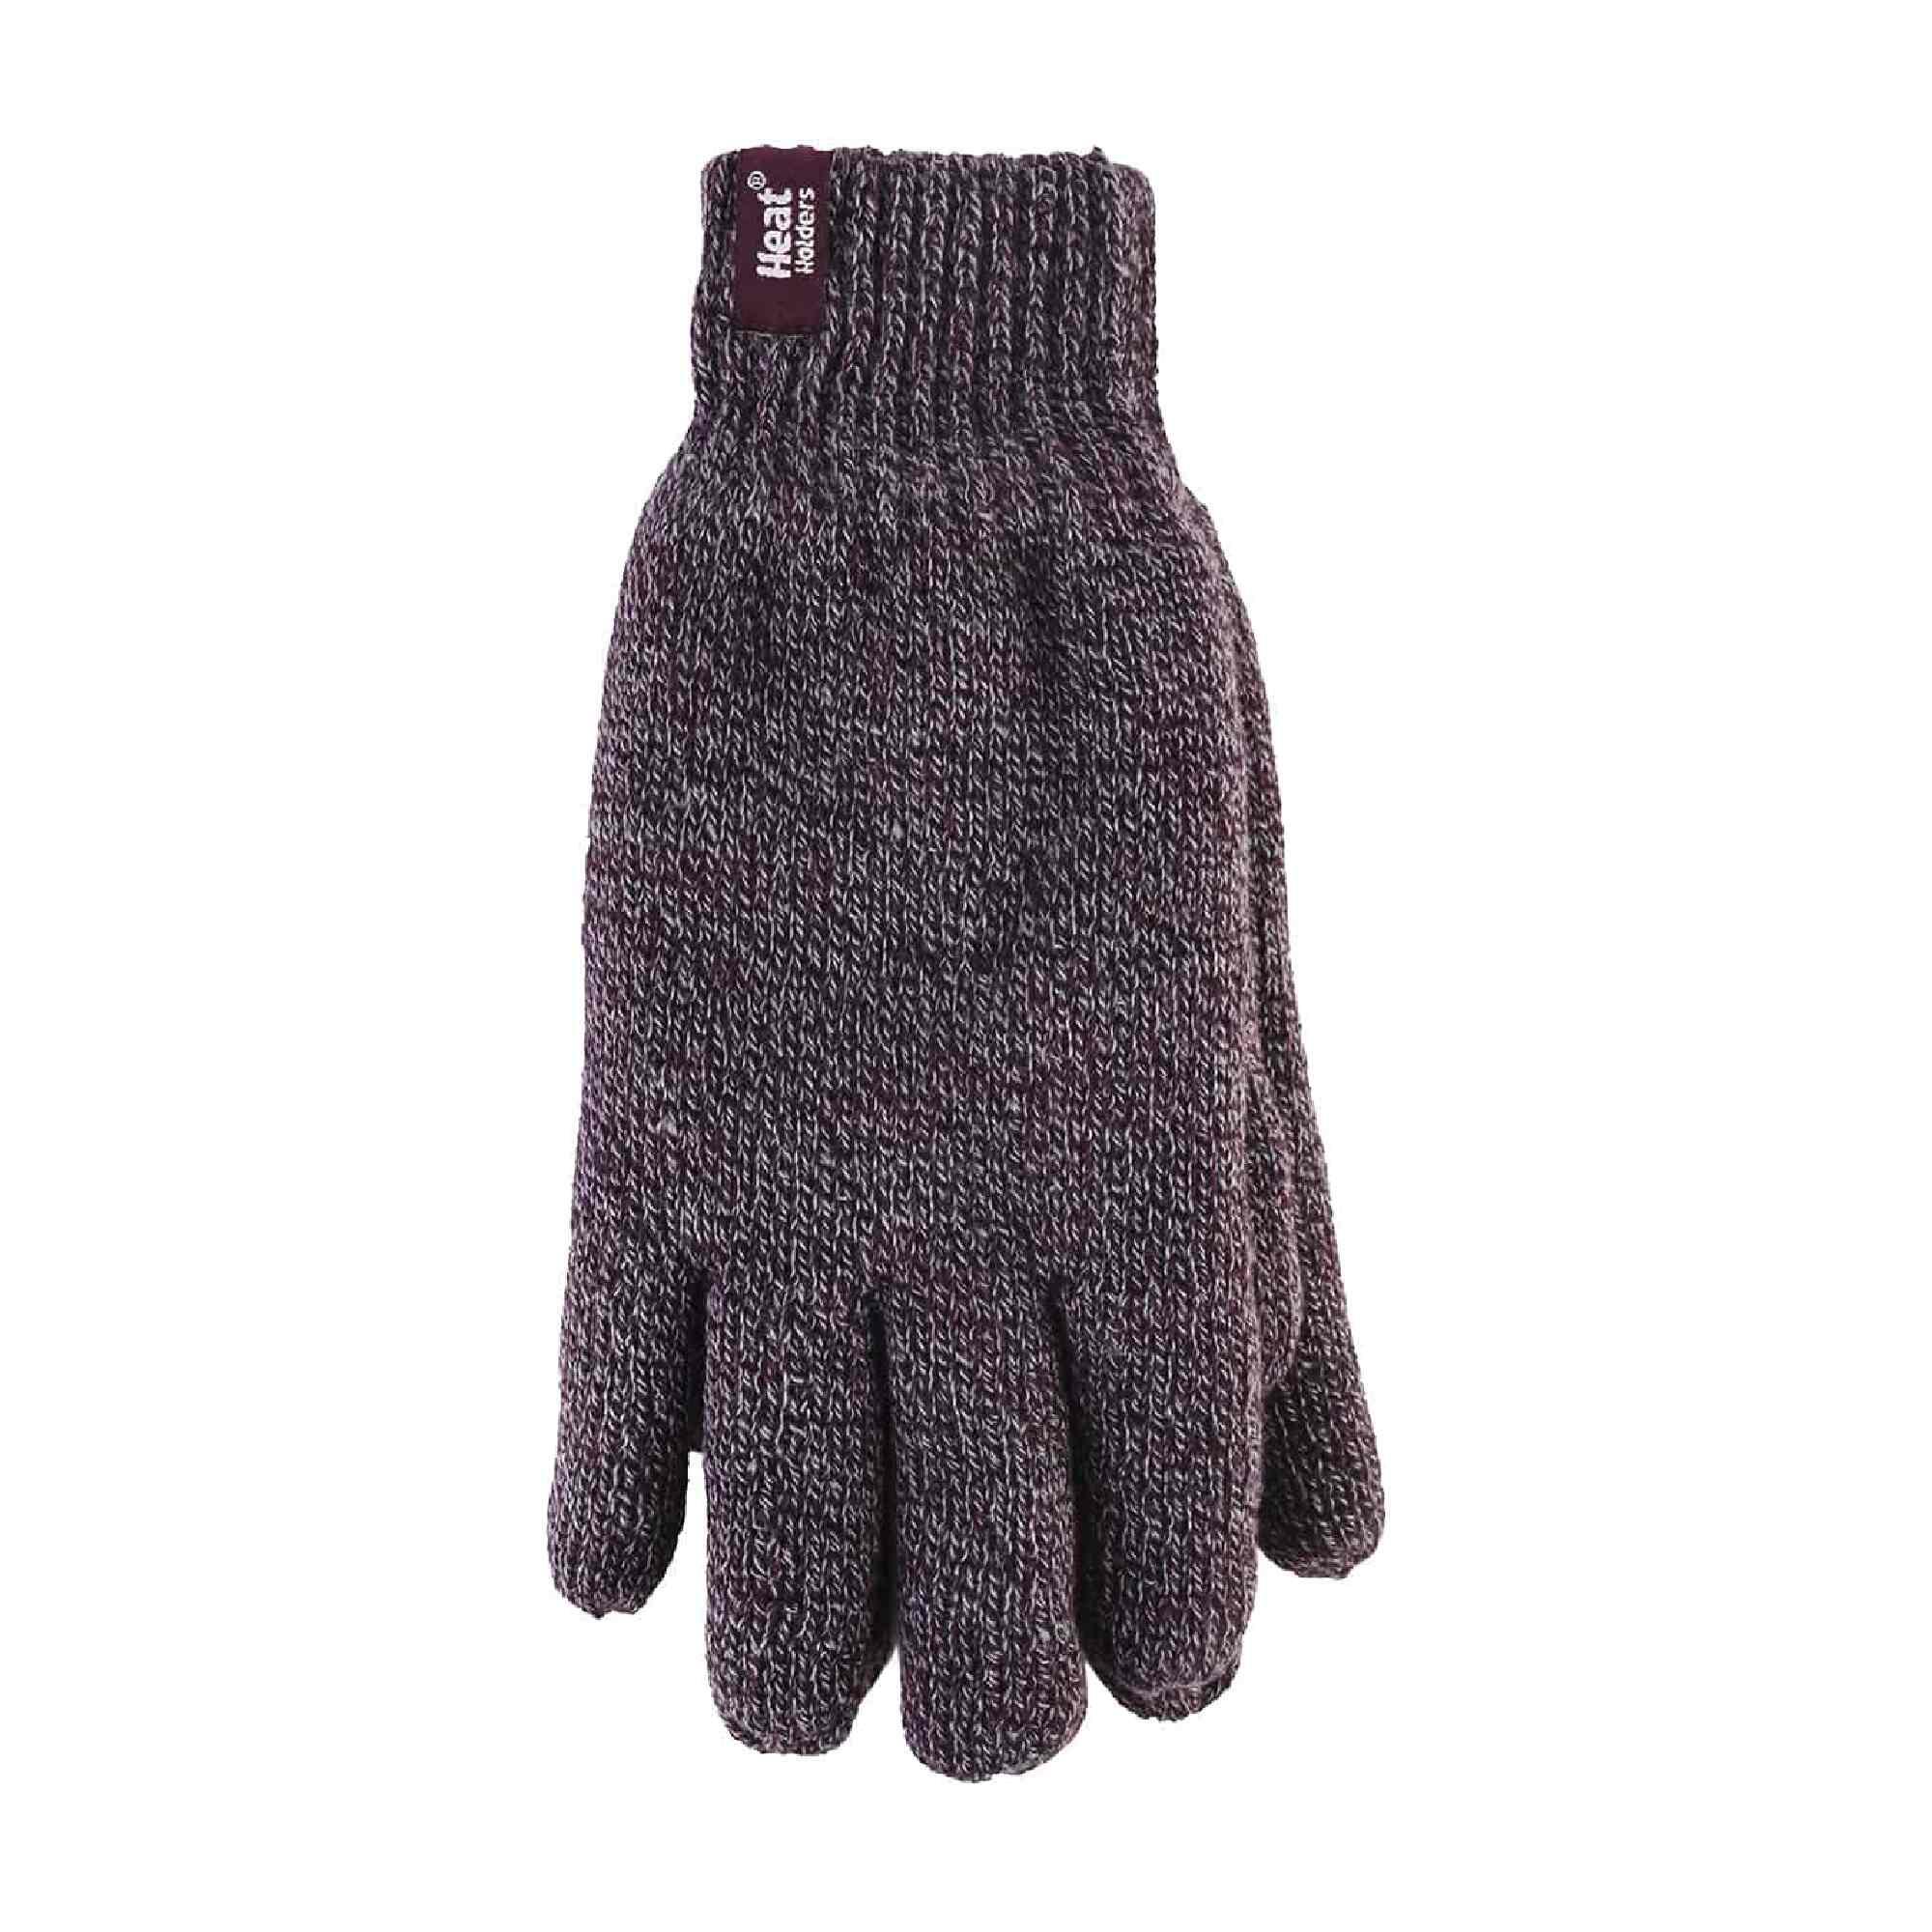 HEAT HOLDERS Mens Winter Warm Fleece Lined Thermal Gloves with Heatweaver Lining